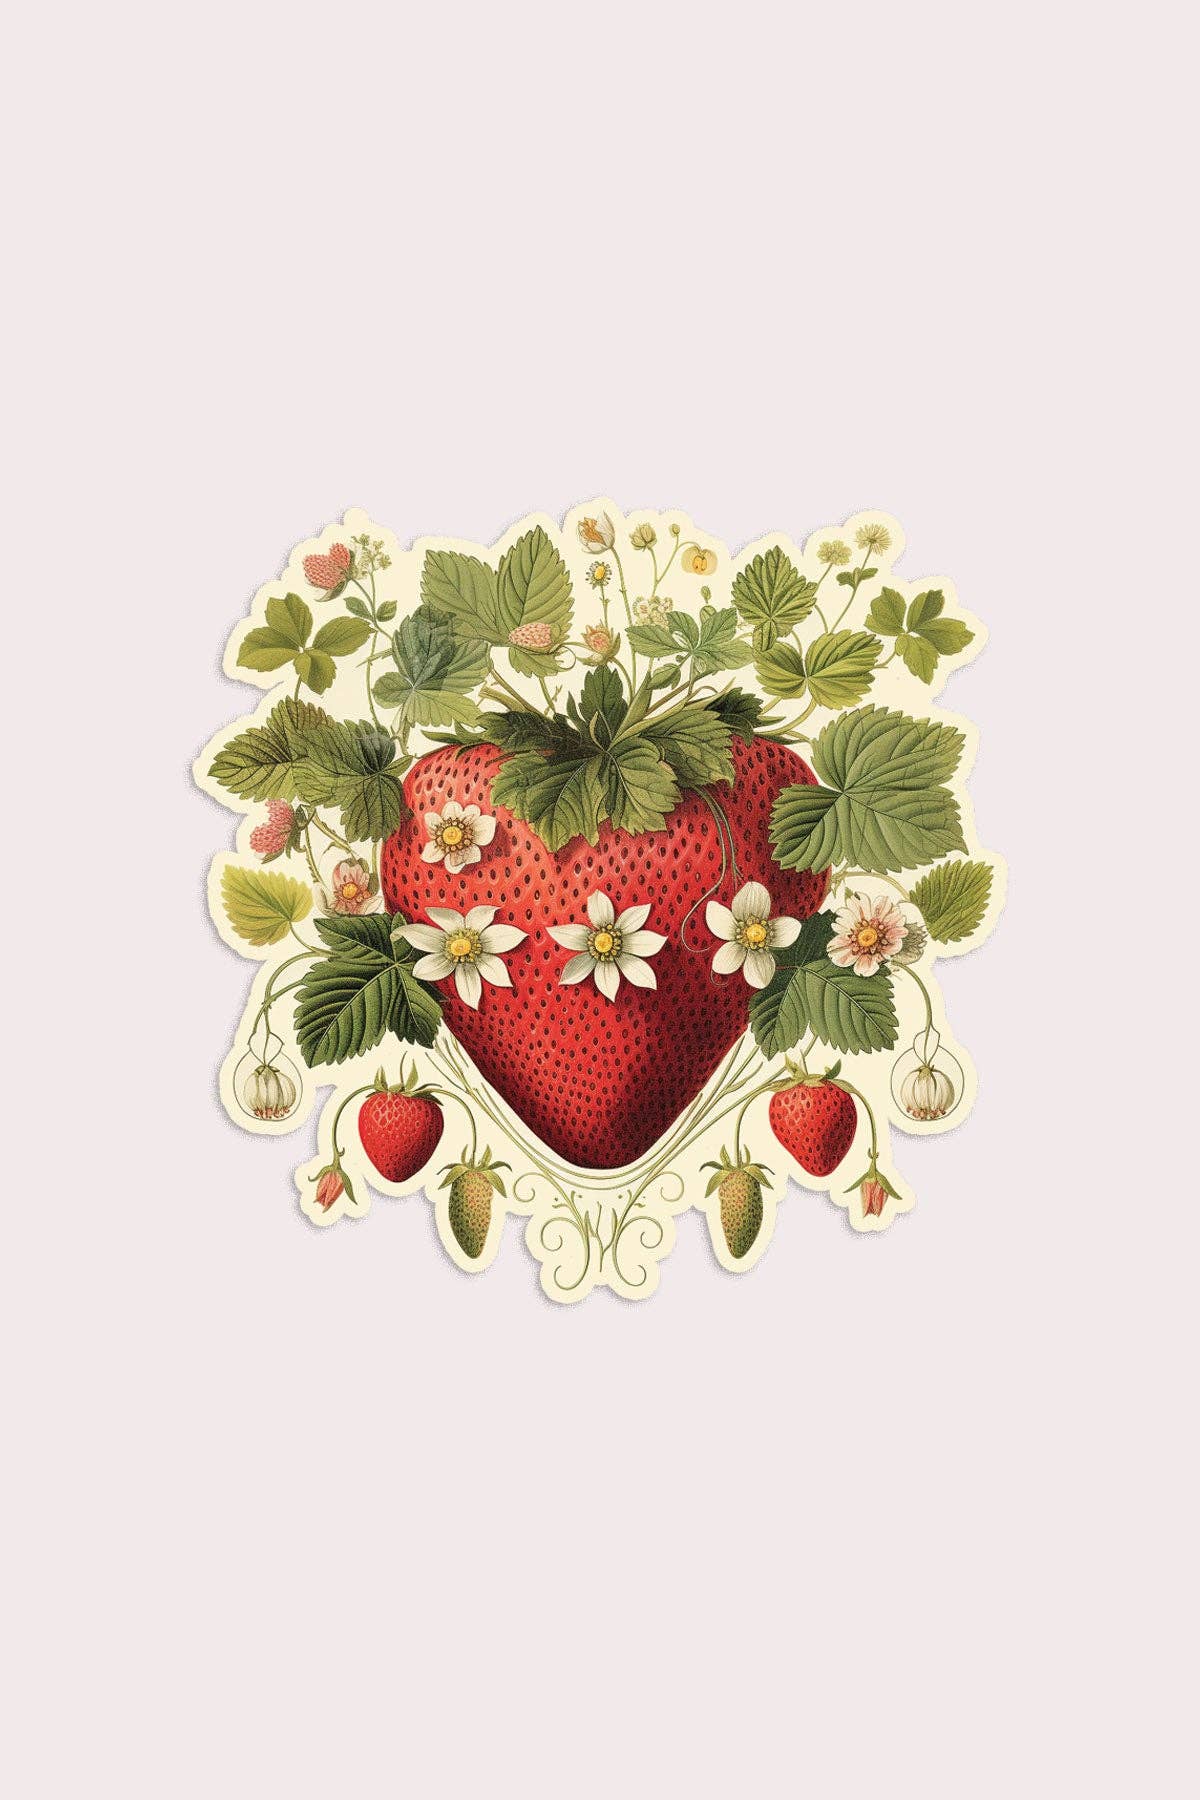 Strawberry Valentine Vinyl Sticker - Out of the Blue